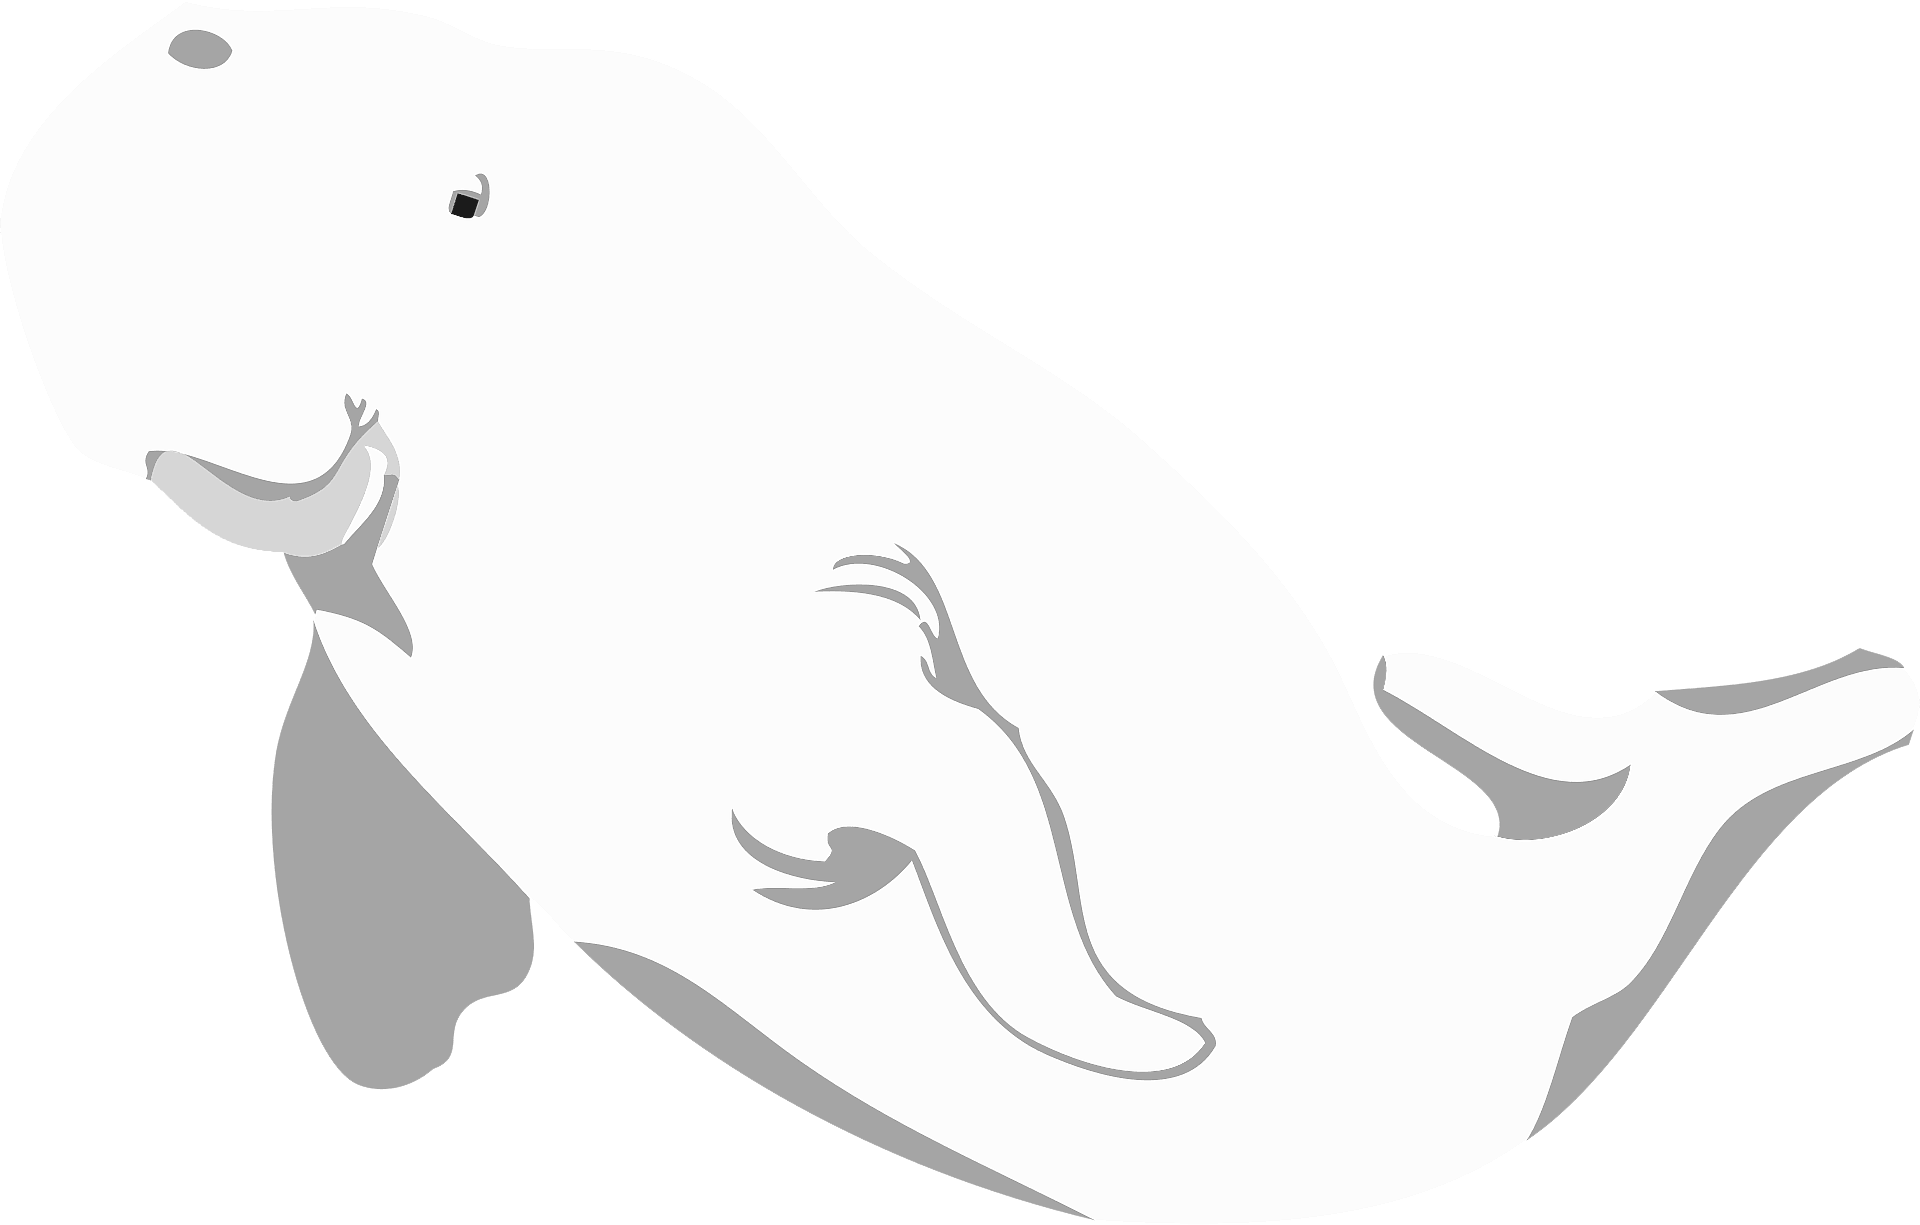 Coloring page of a beluga